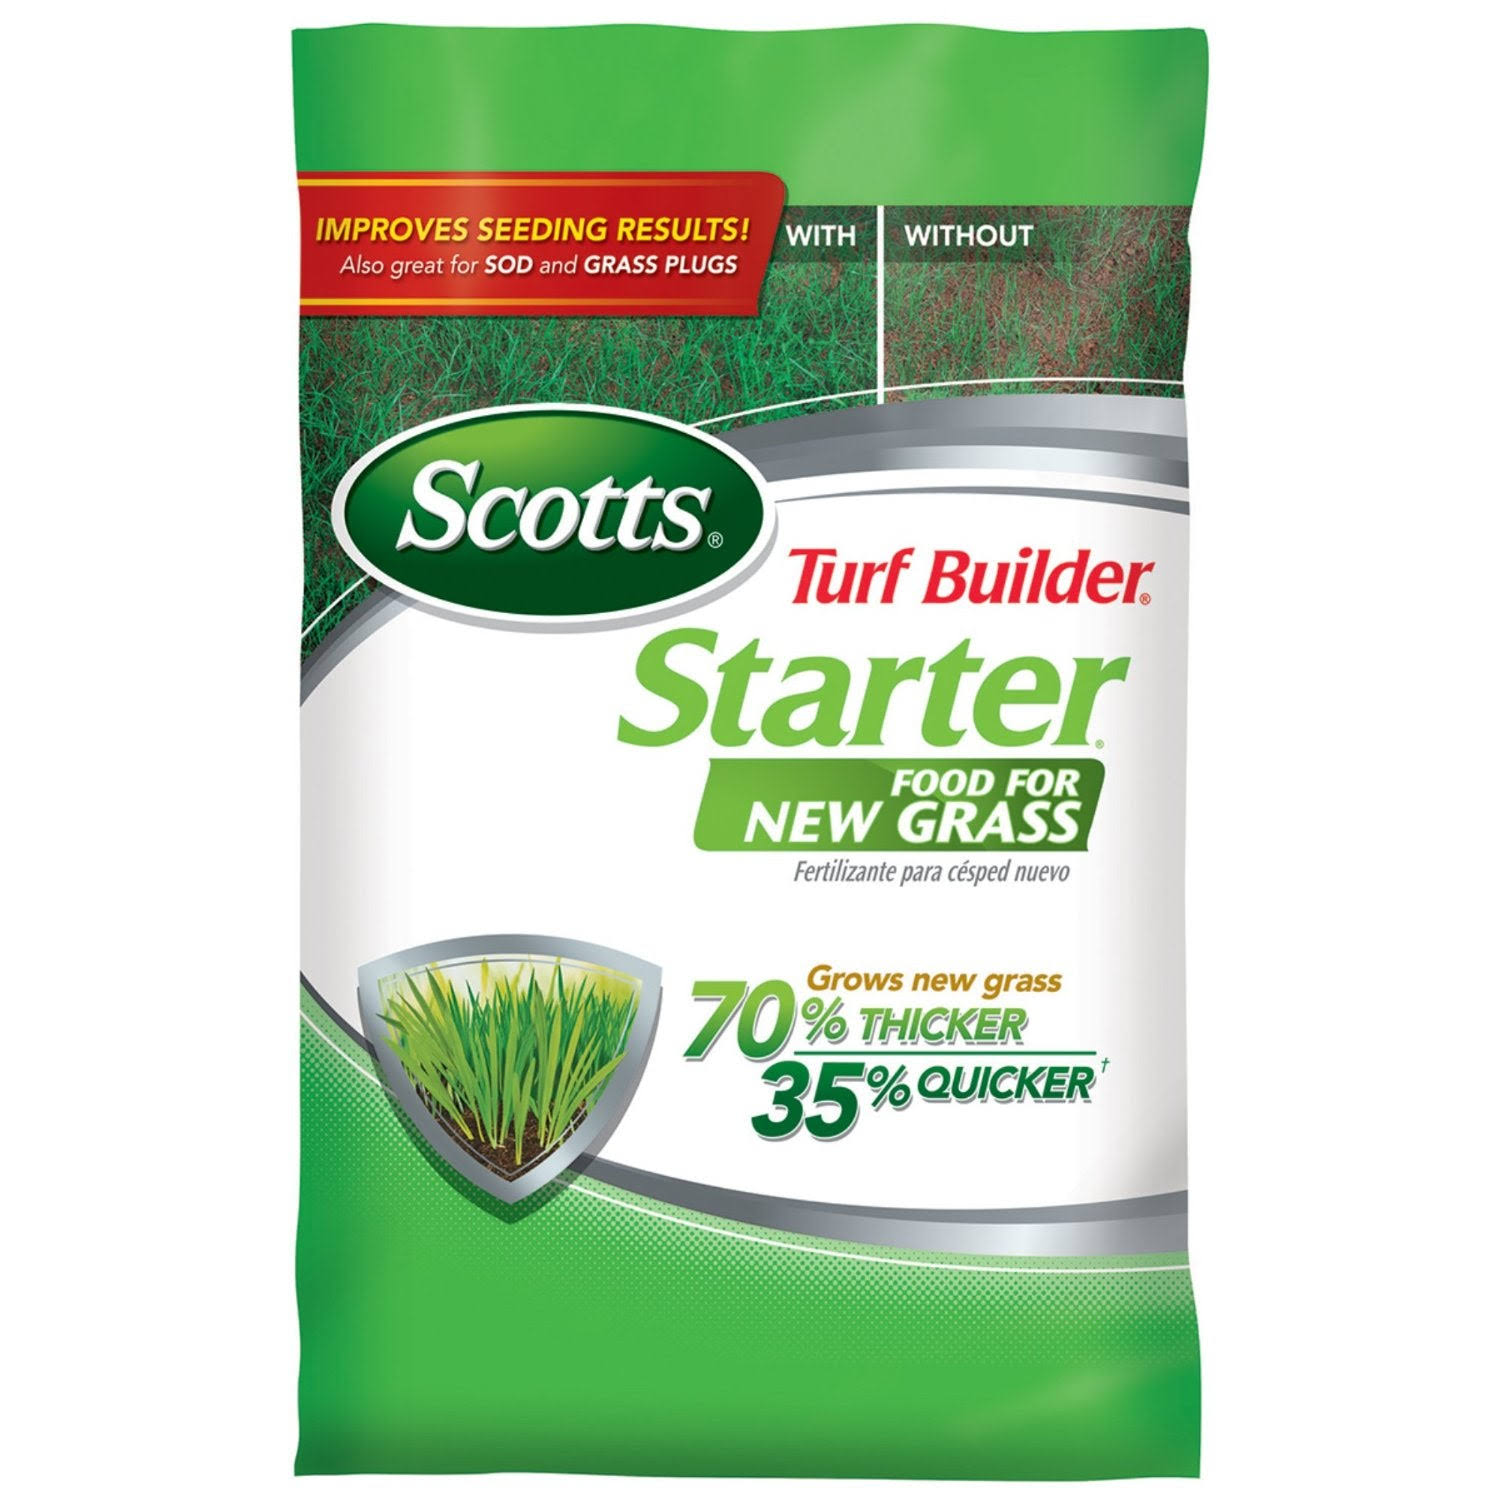 Scotts Turf Builder Starter Brand Fertilizer